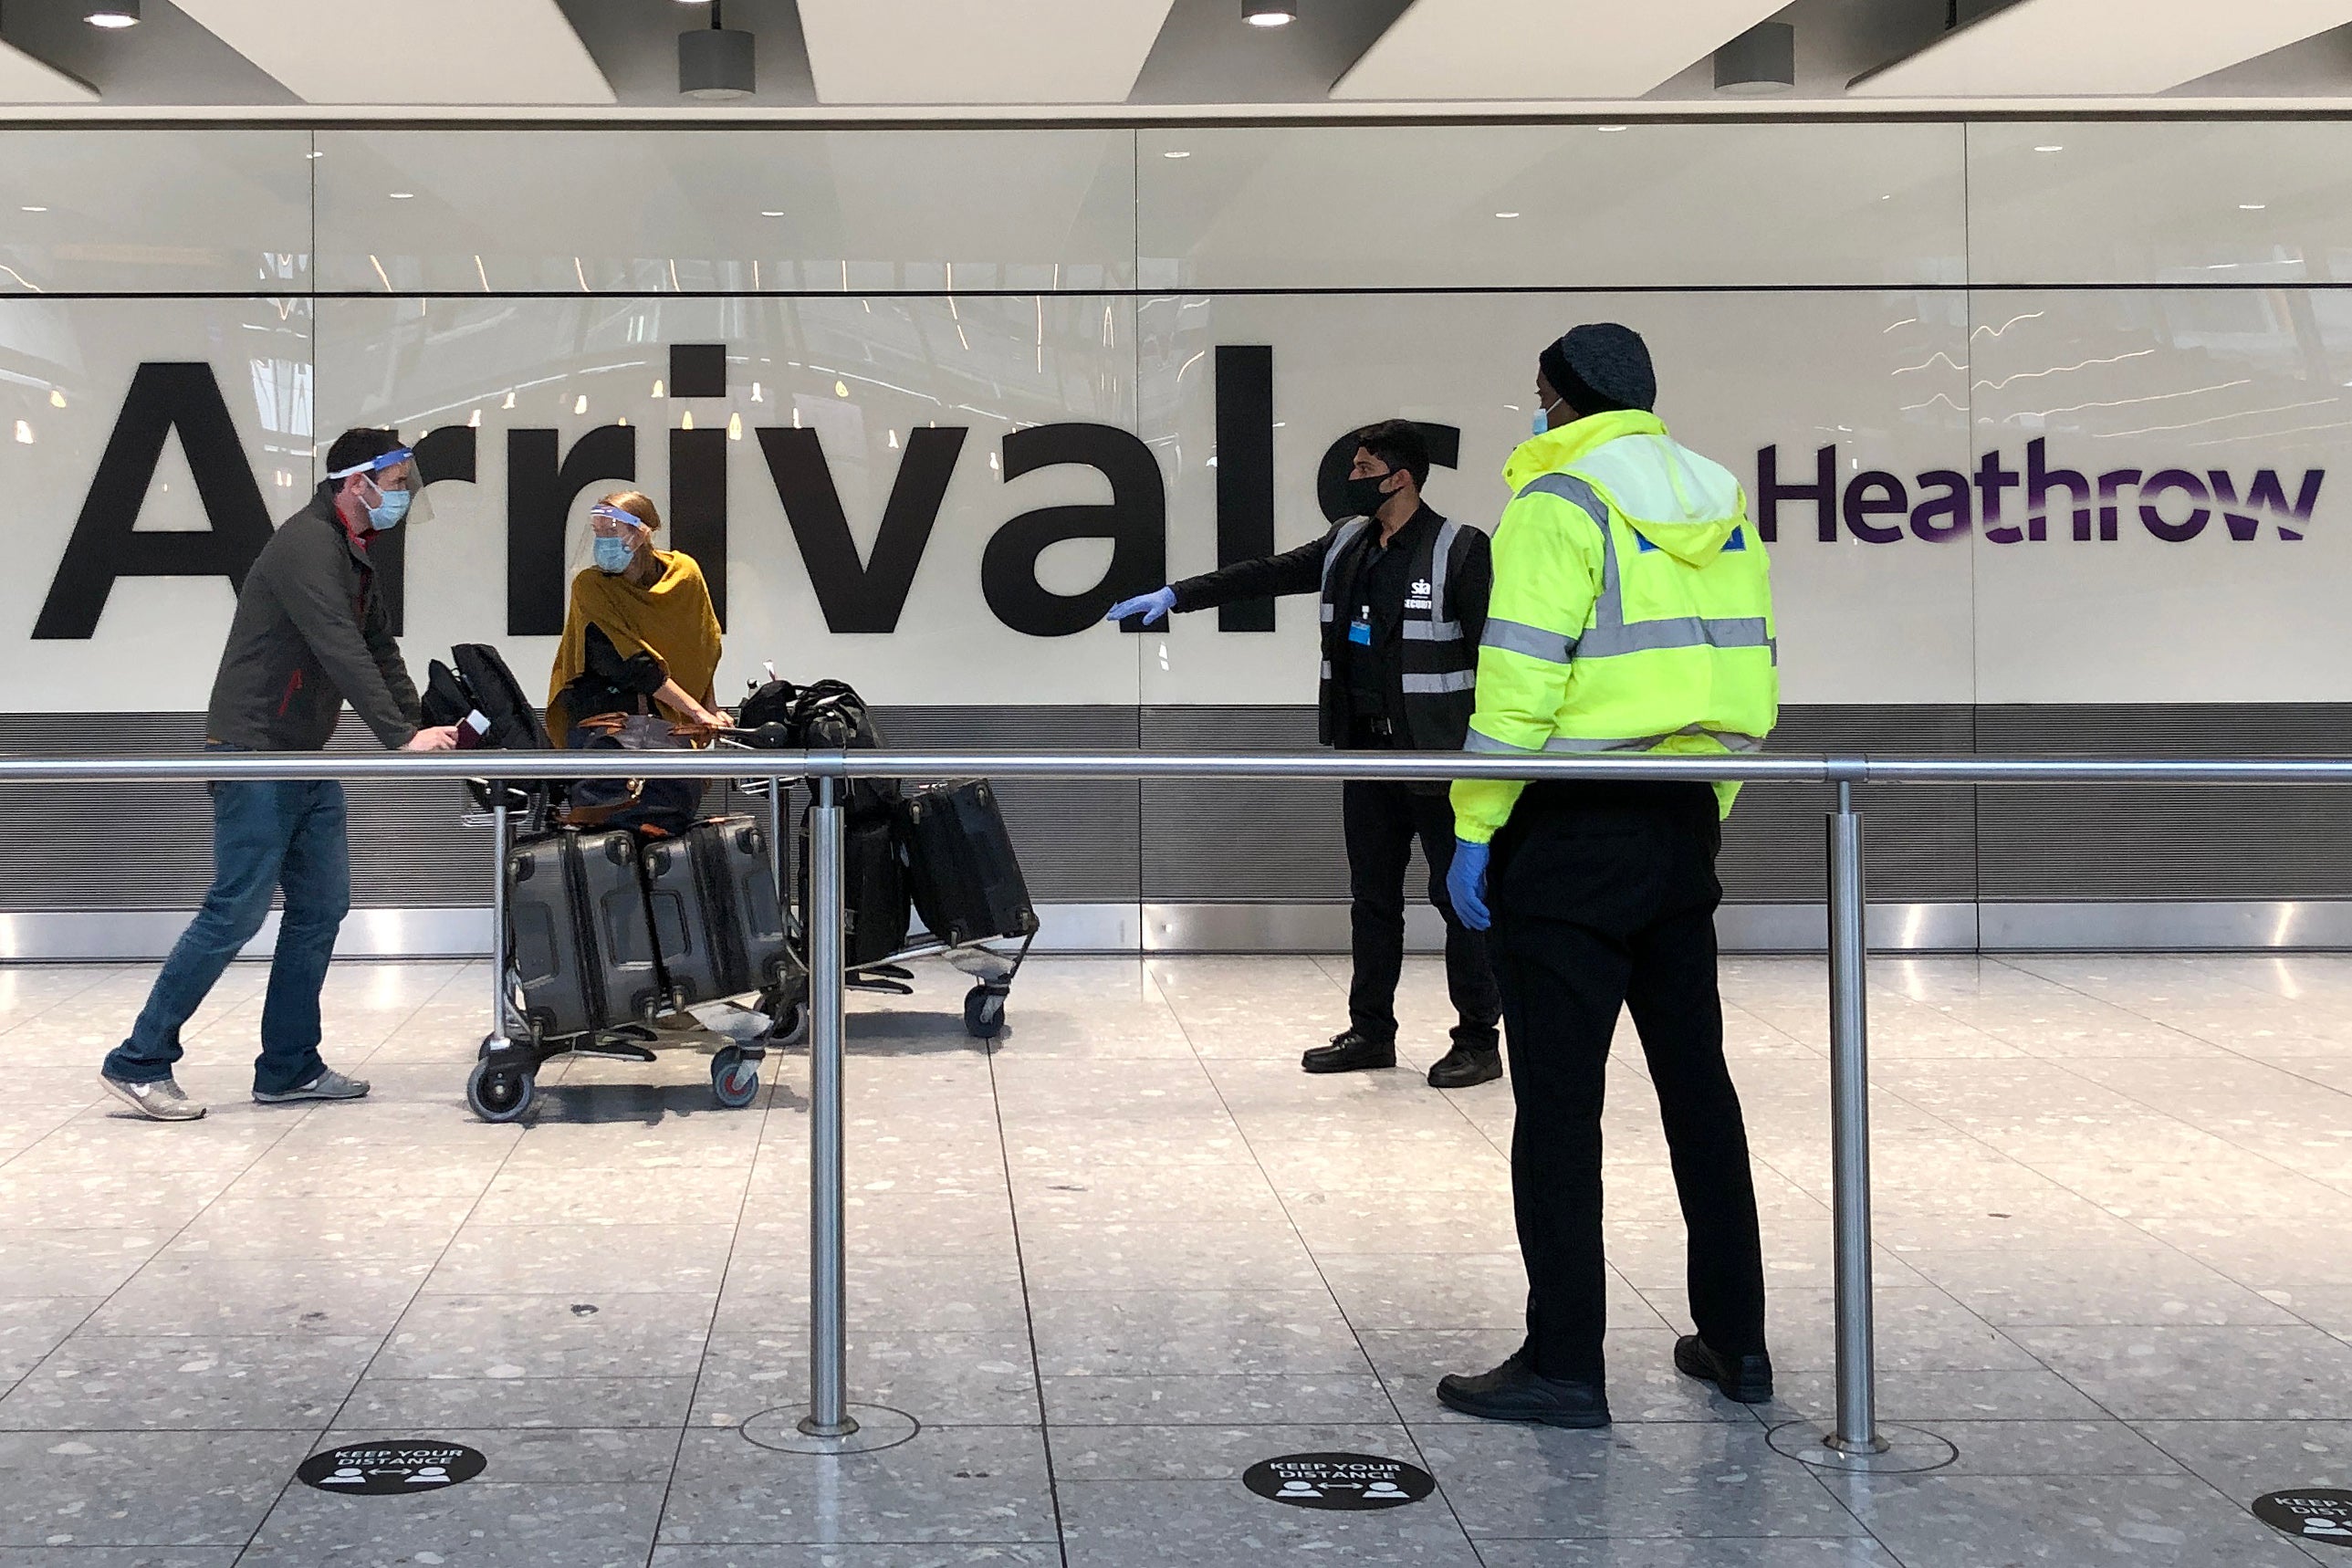 Passengers arriving at Heathrow airport